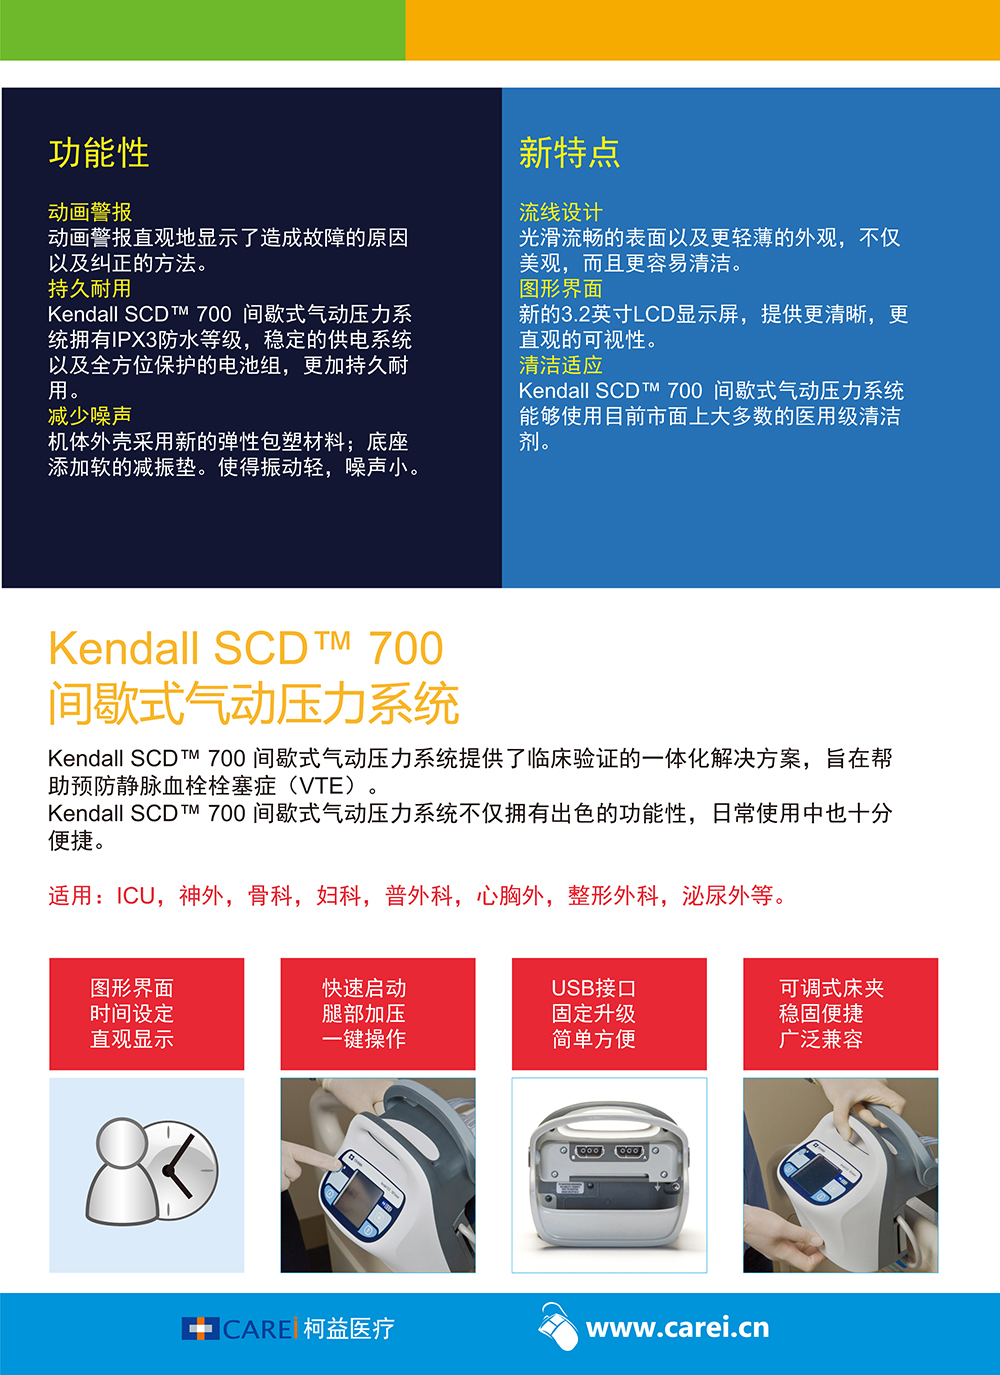 kendall-scd-700-series-controller-f3.jpg